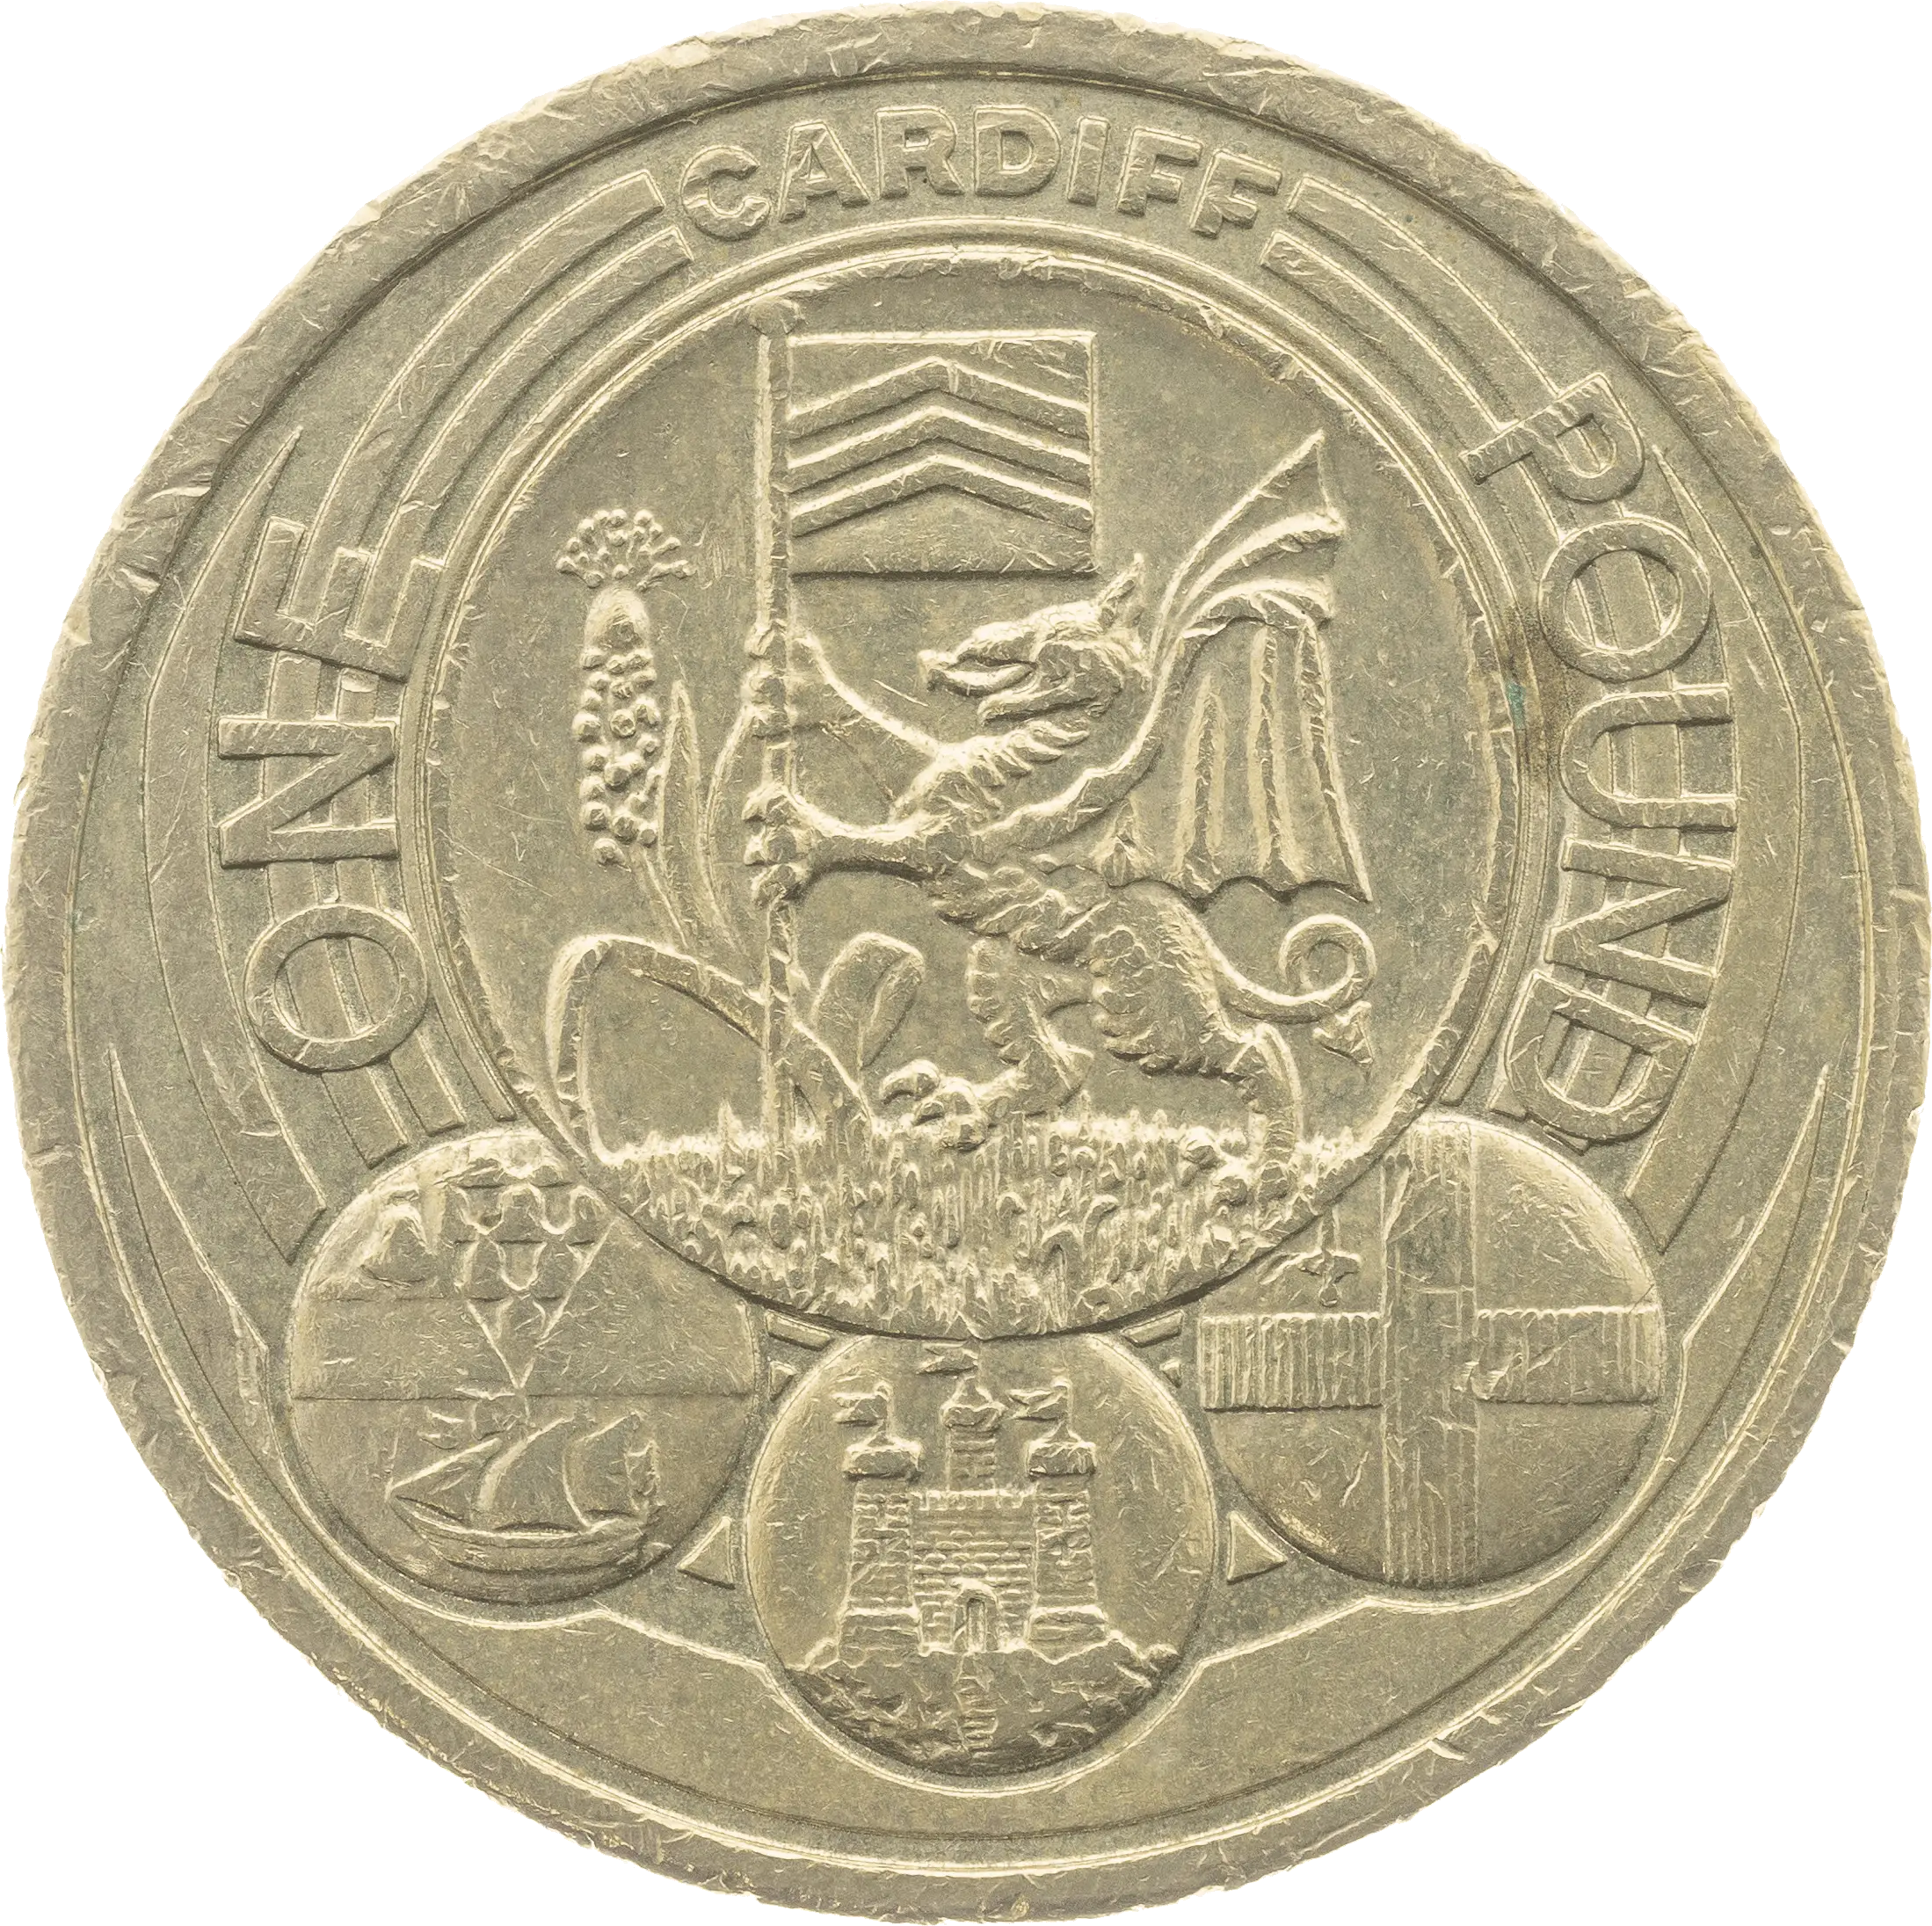 Cardiff £1 Coin Design